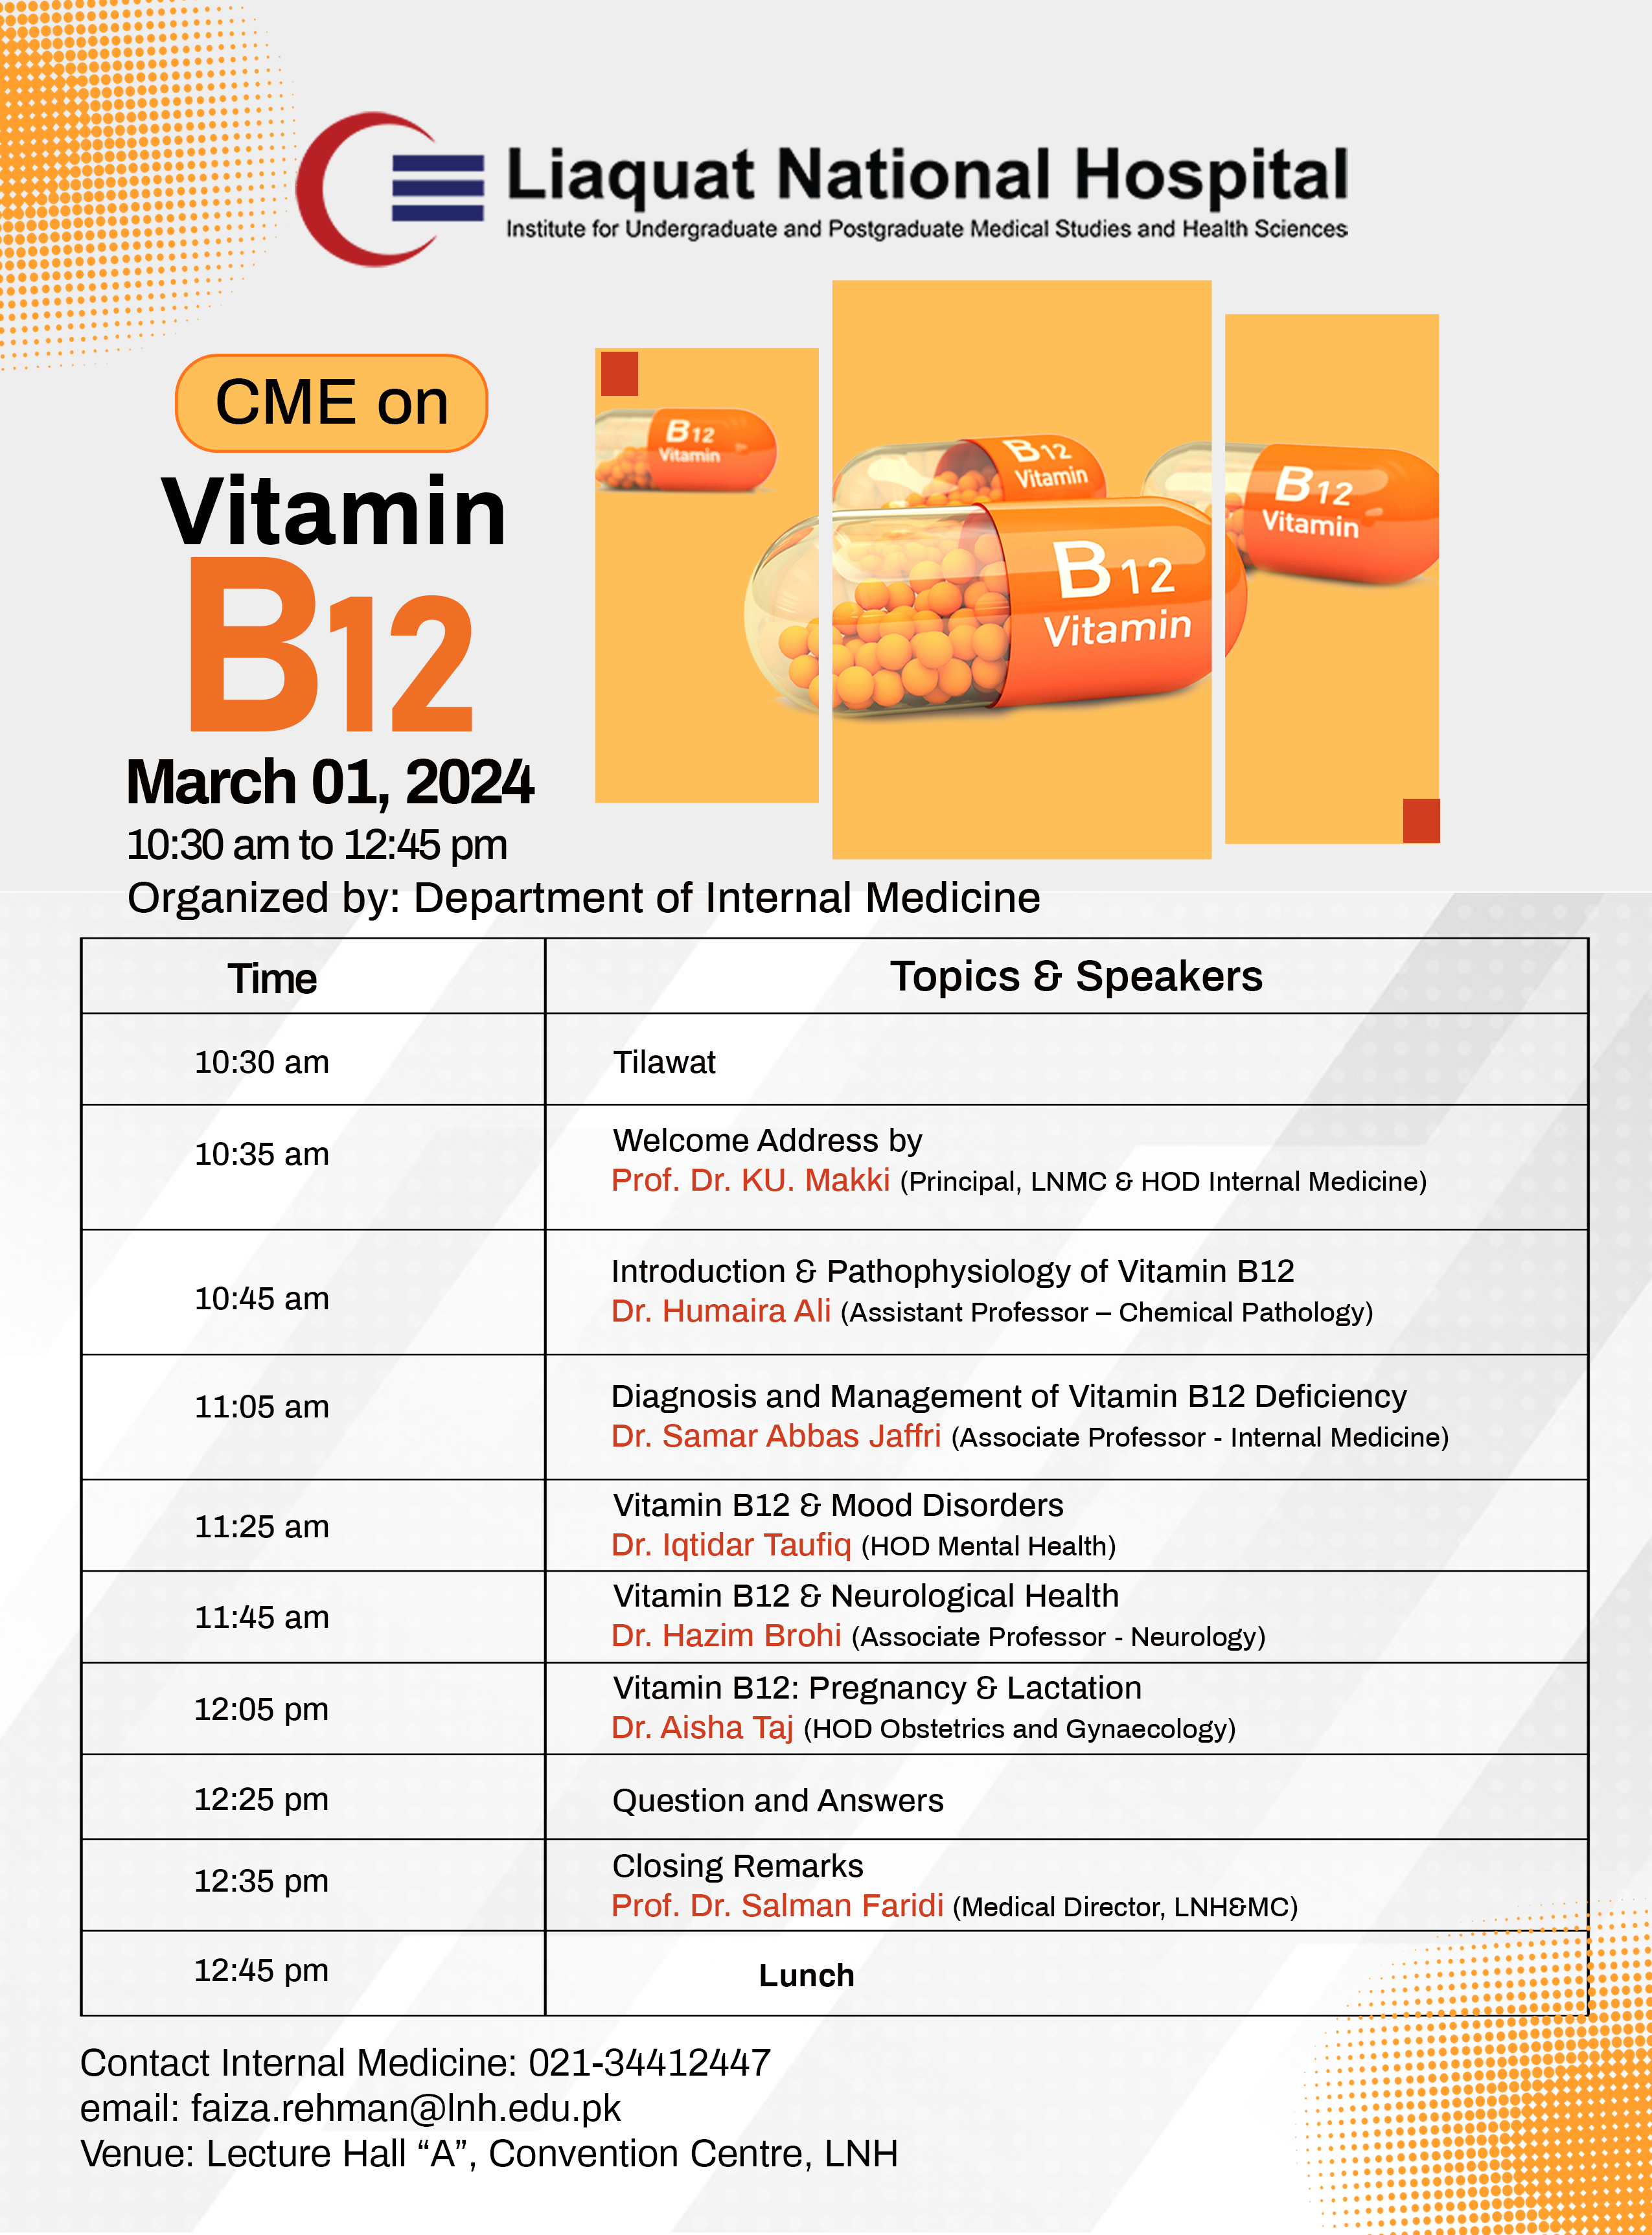 CME on Vitamin B12